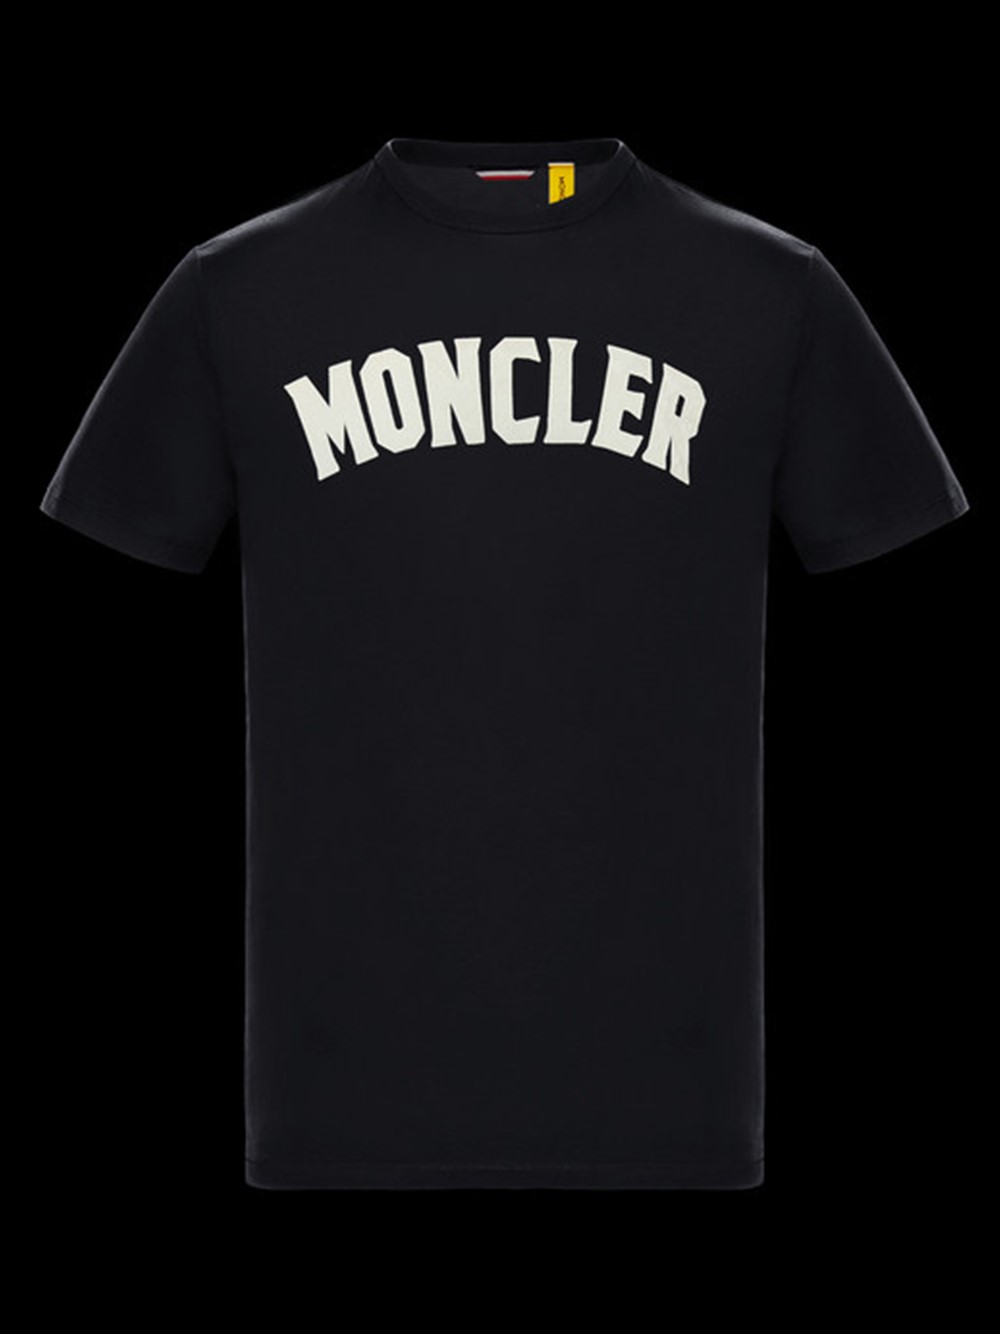 moncler genius MONCLER GENIUS 2 LOGO T-SHIRT: MONCLER 1962 available on ...